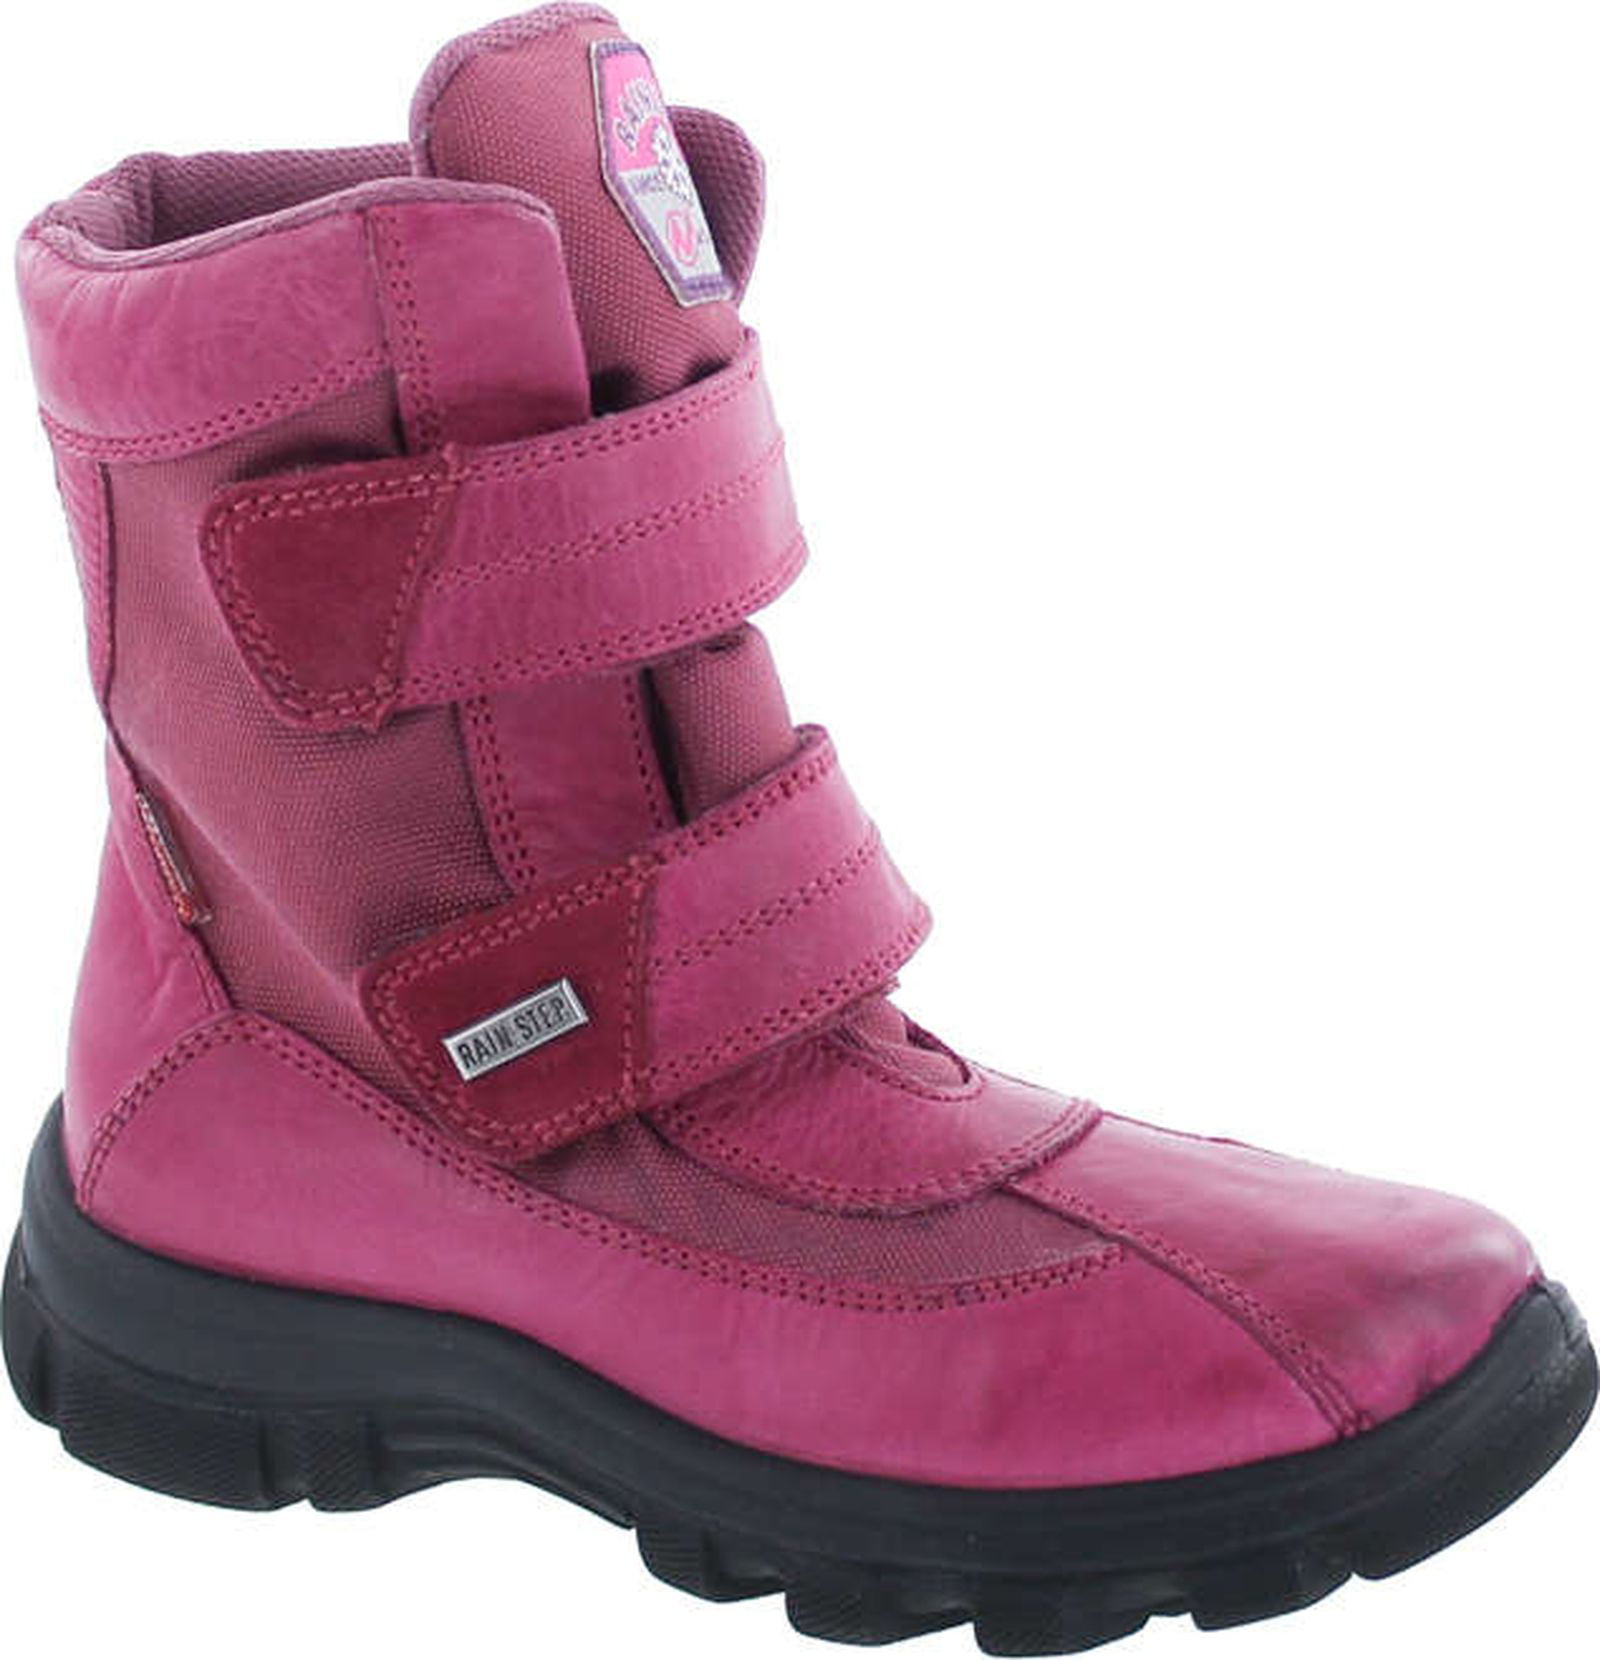 Naturino Kids Barents Step Winter Fashion Boots, Cerato Berry, 34 -